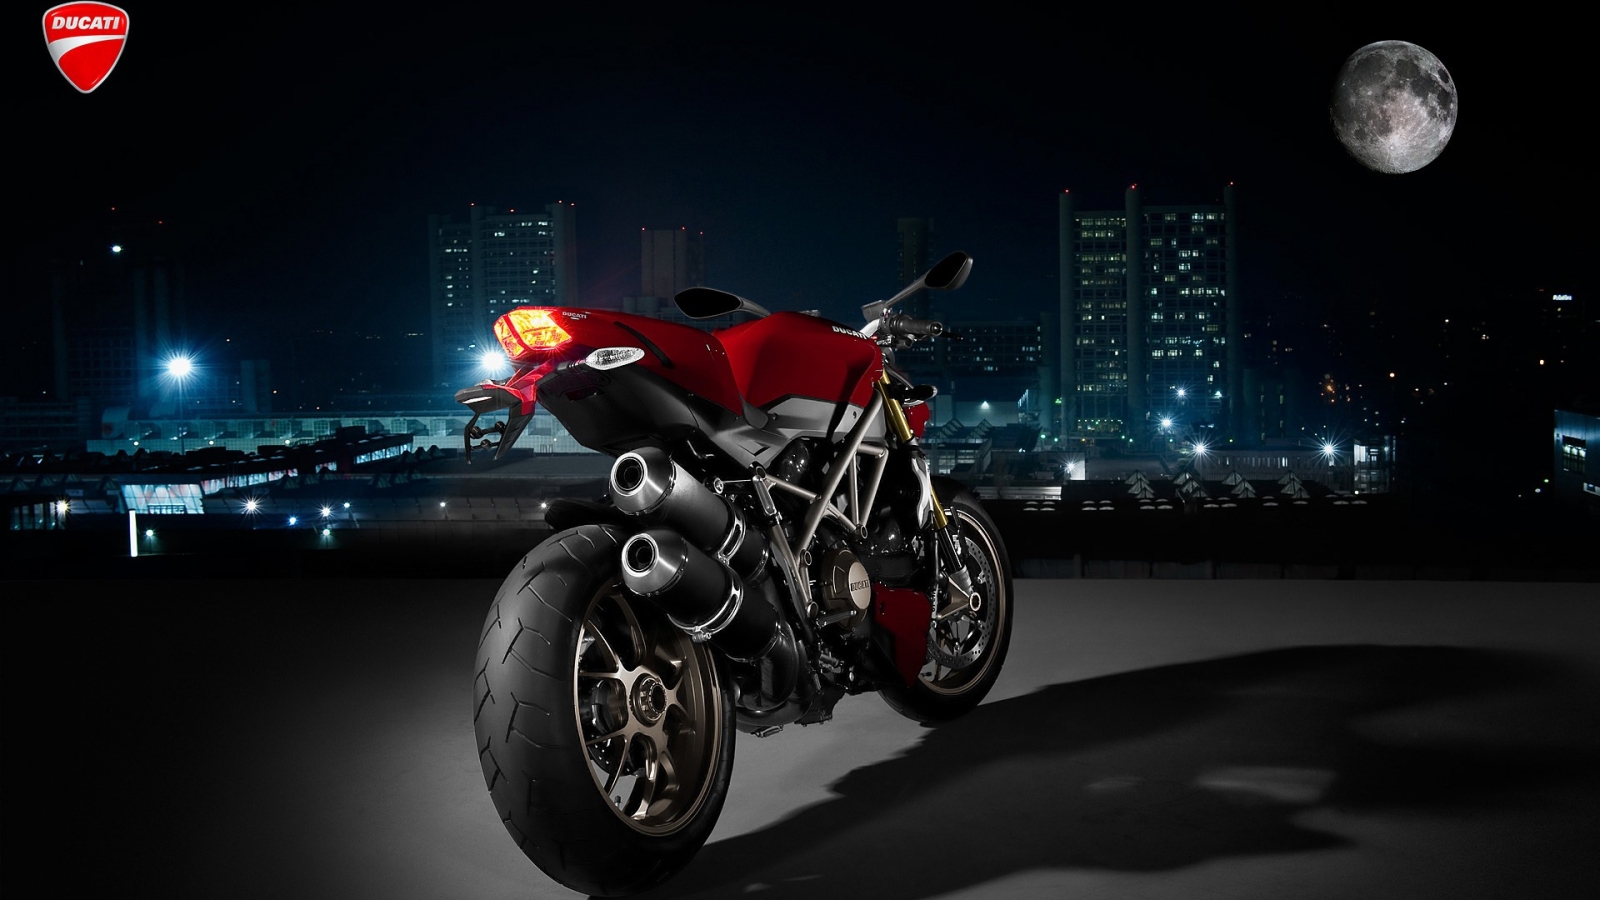 Ducati Super Sport Rear Angle for 1600 x 900 HDTV resolution